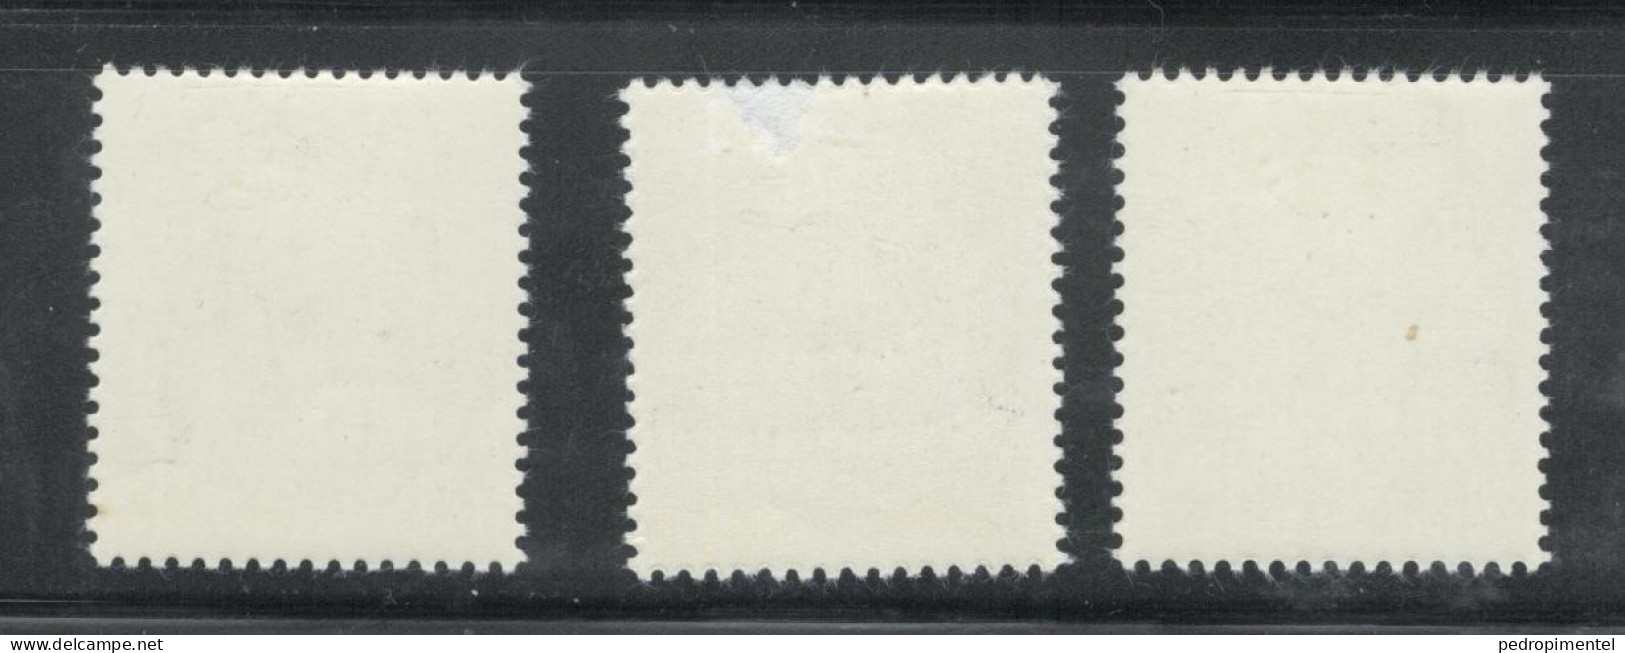 Portugal Stamps 1966 "Bocage" Condition MH OG #994-996 - Unused Stamps